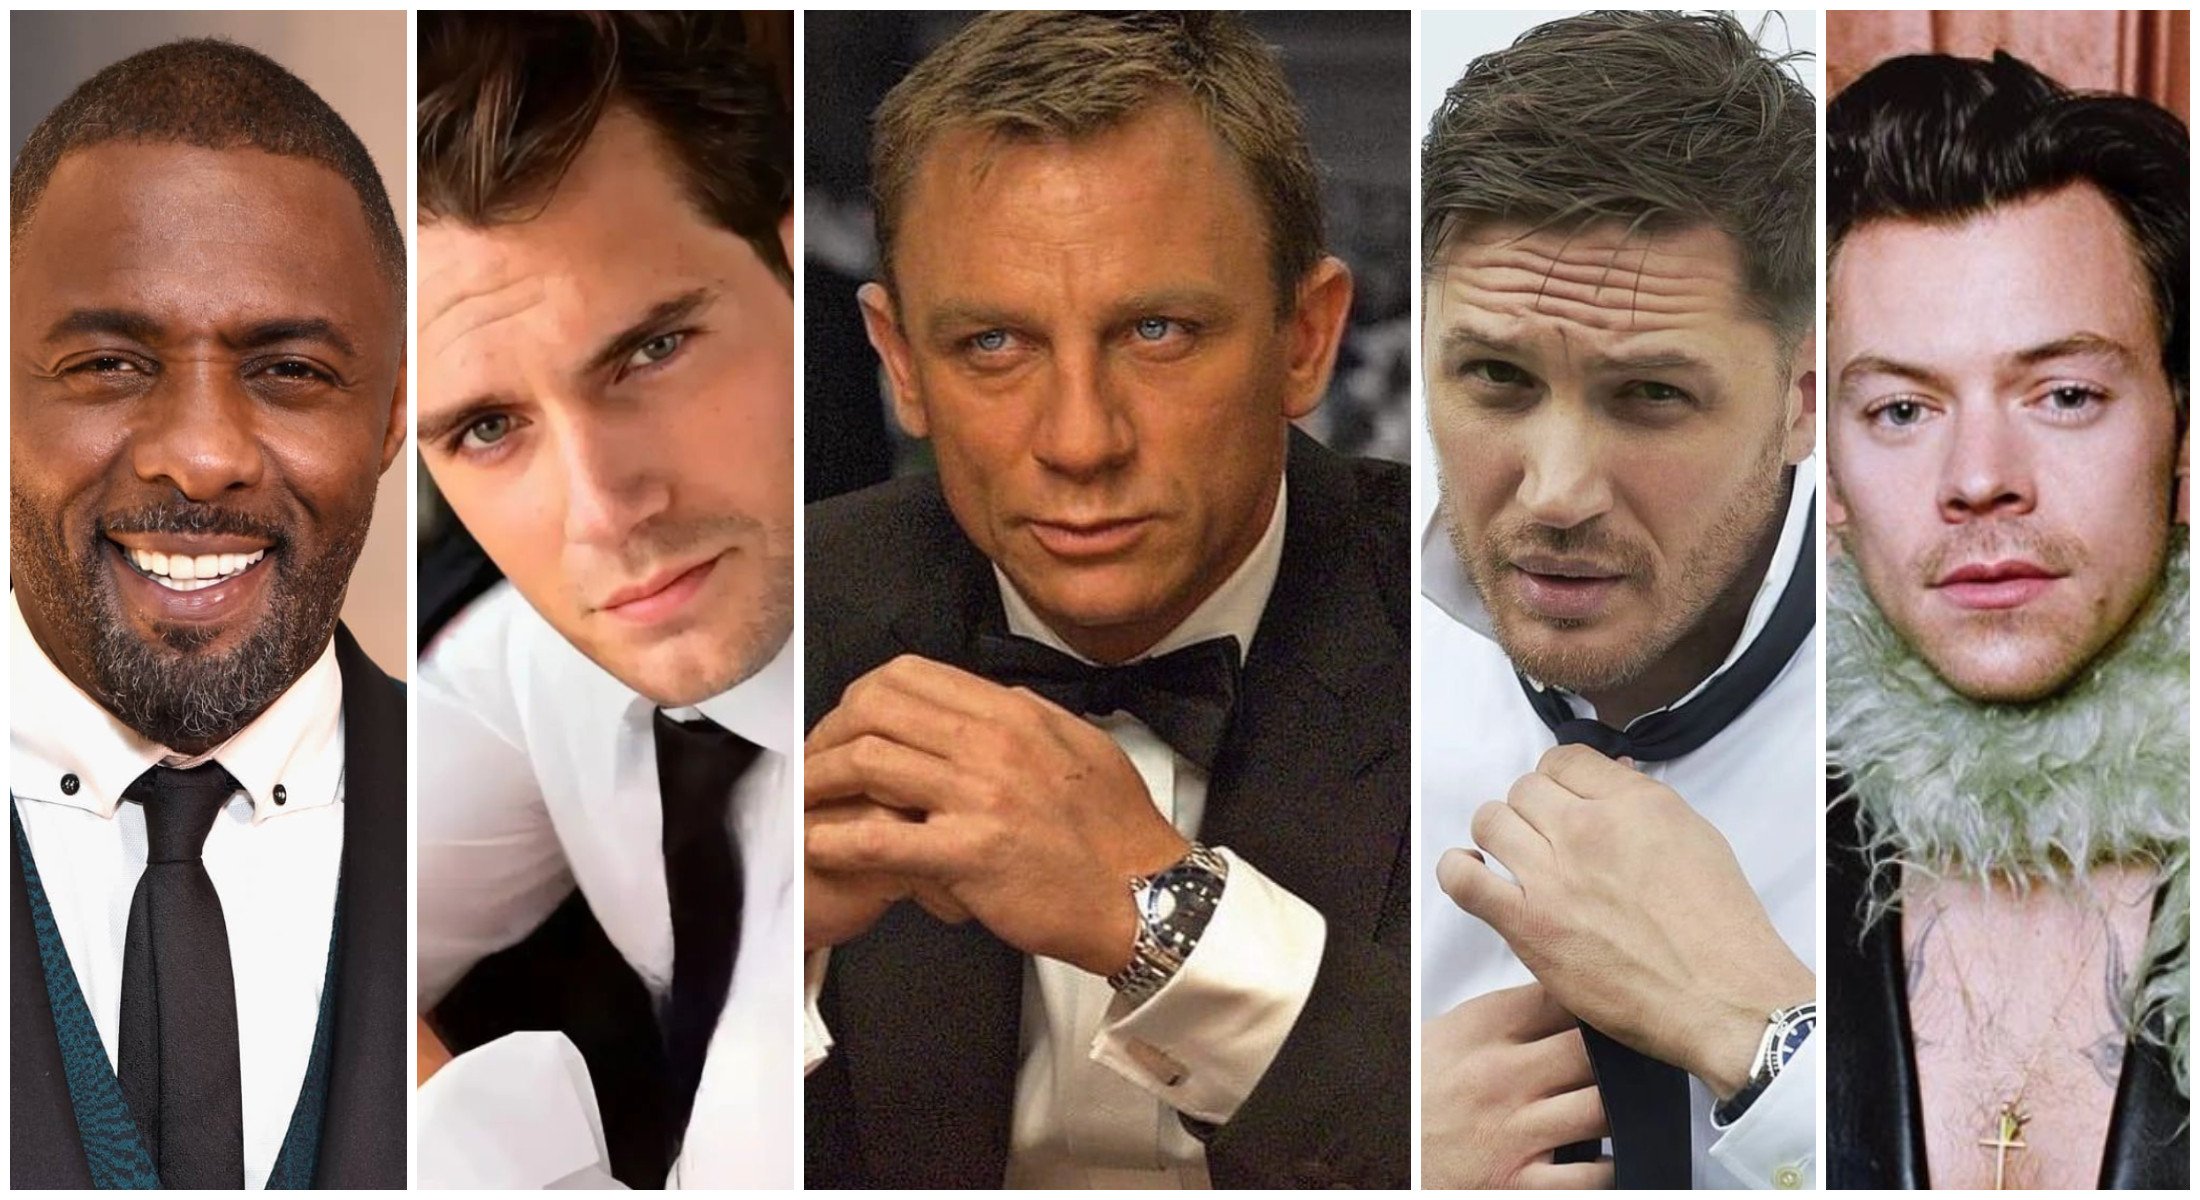 Could Idris Elba, Henry Cavill, Tom Hardy or Harry Styles replace Daniel Craig as James Bond? The film’s producers remain tight lipped. Photos: @idriselbaworld, @henrycavilll, @danielcraigofflcial_, @tom.hardy.legacy,
@harrystyles/Instagram